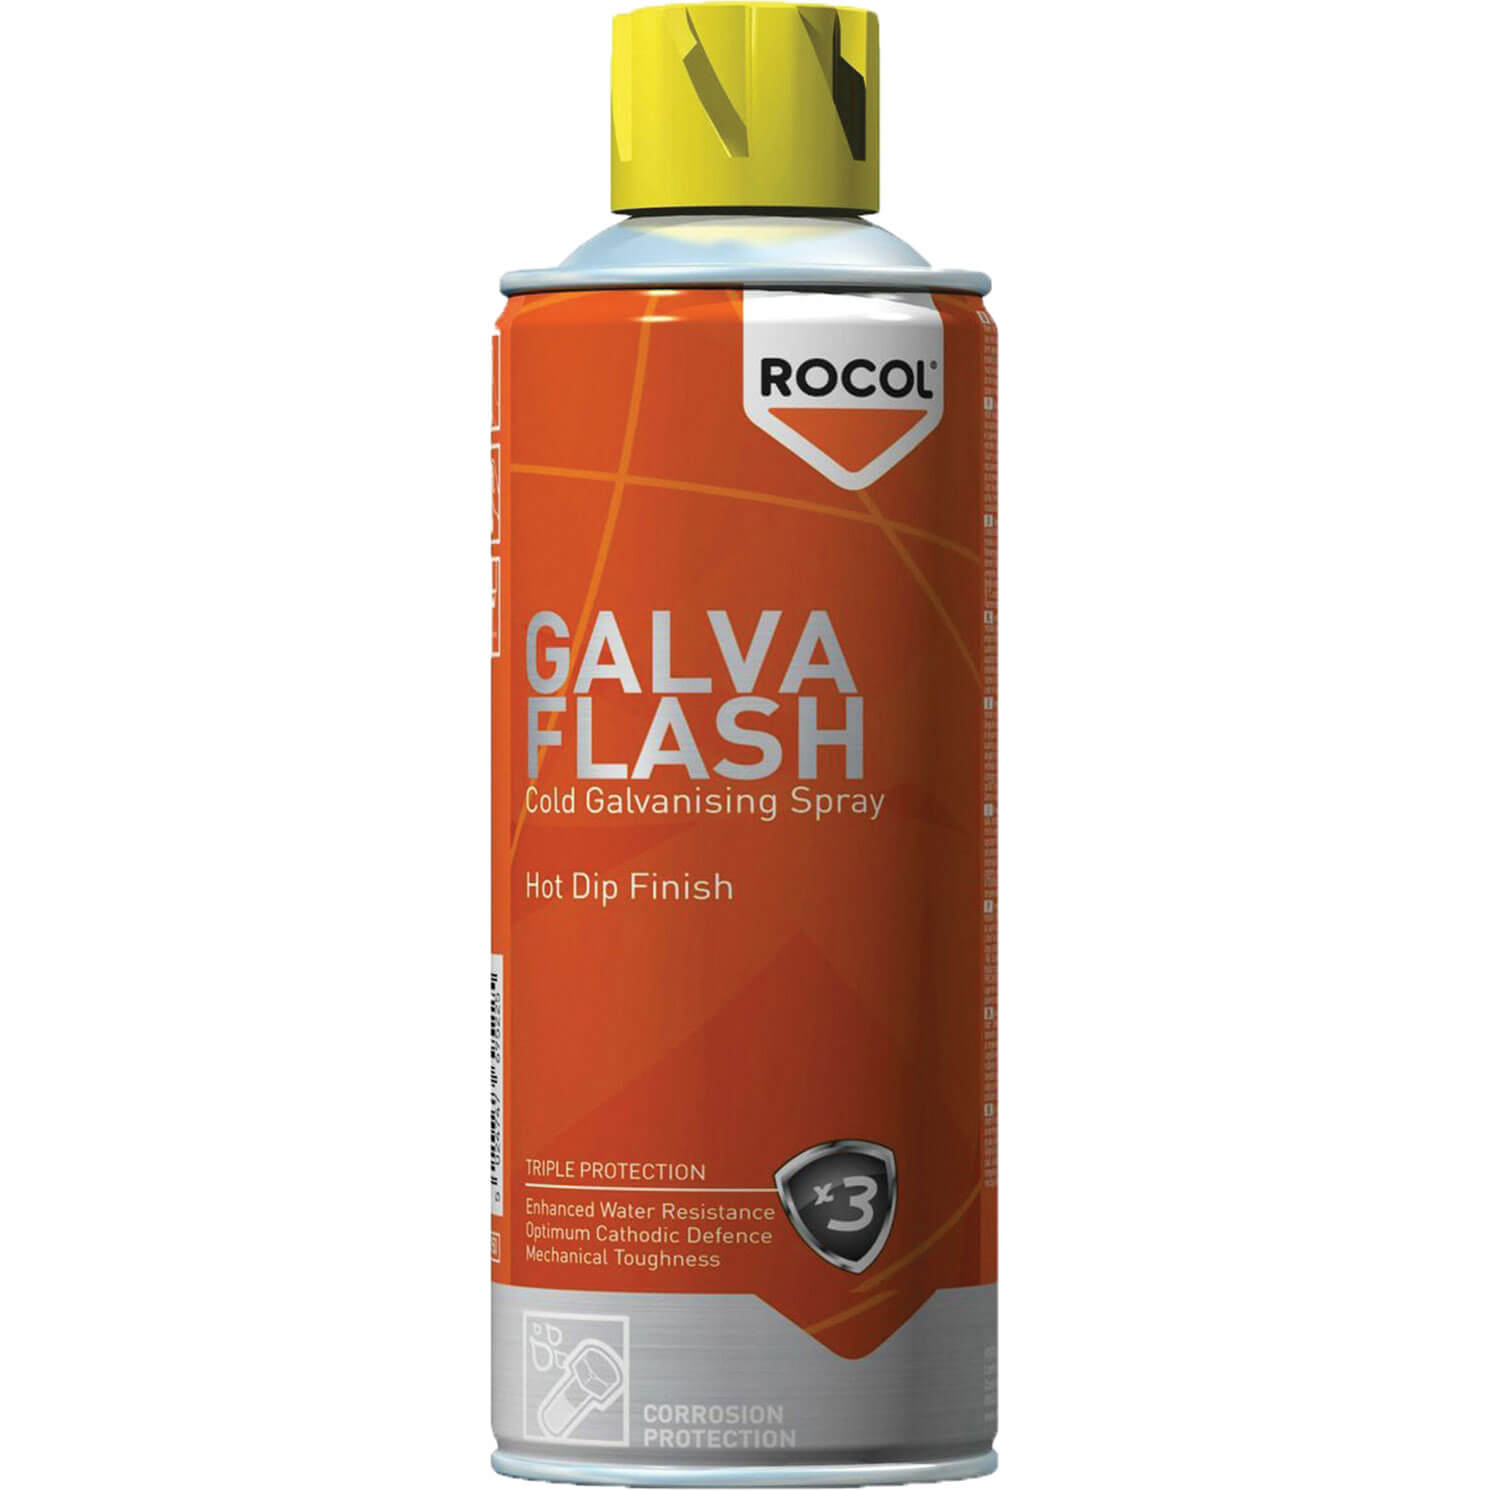 Image of Rocol Galva Flash Cold Galvanising Spray 500ml